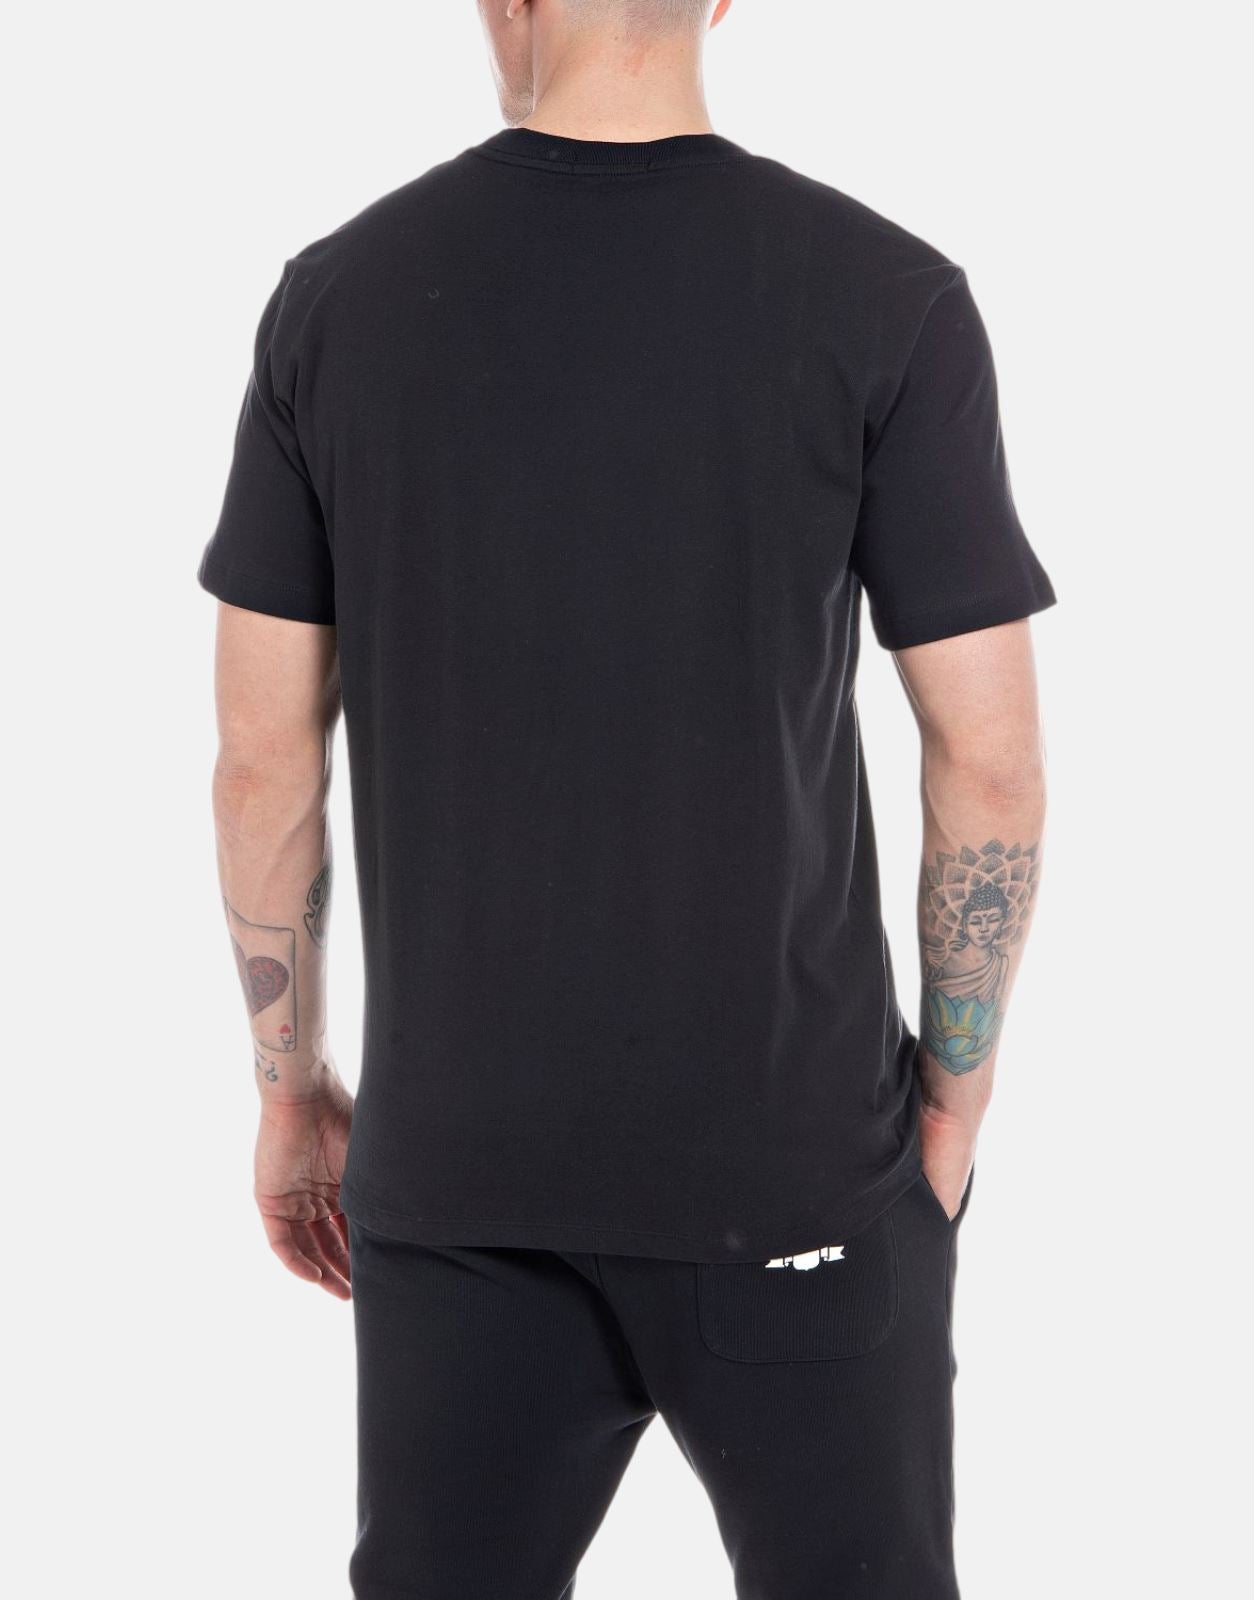 Replay 1981 Print Black T-Shirt - Subwear